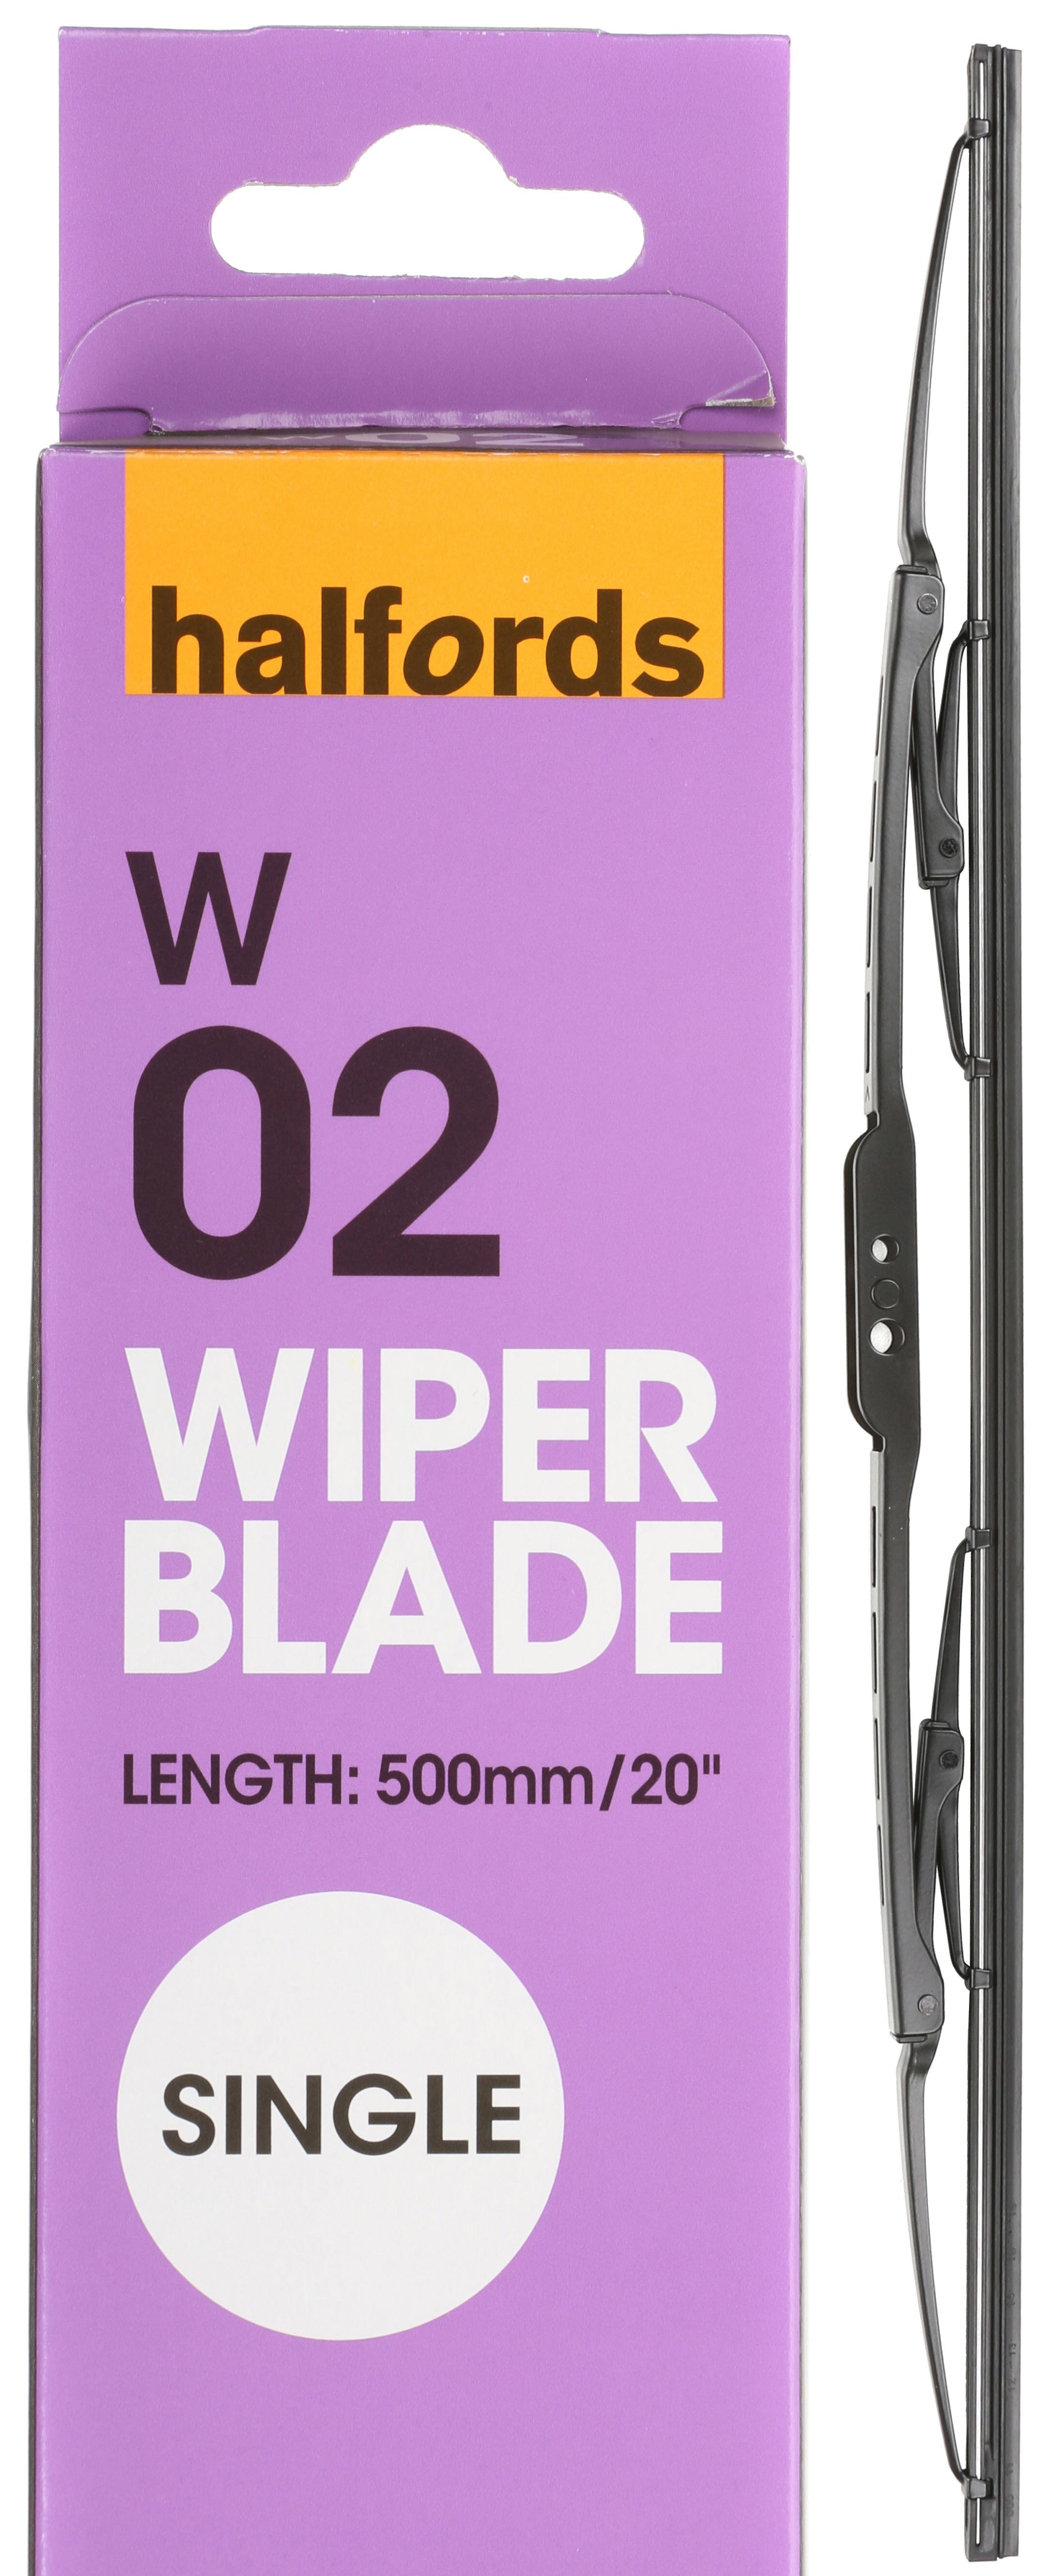 Halfords W02 Wiper Blade - Single